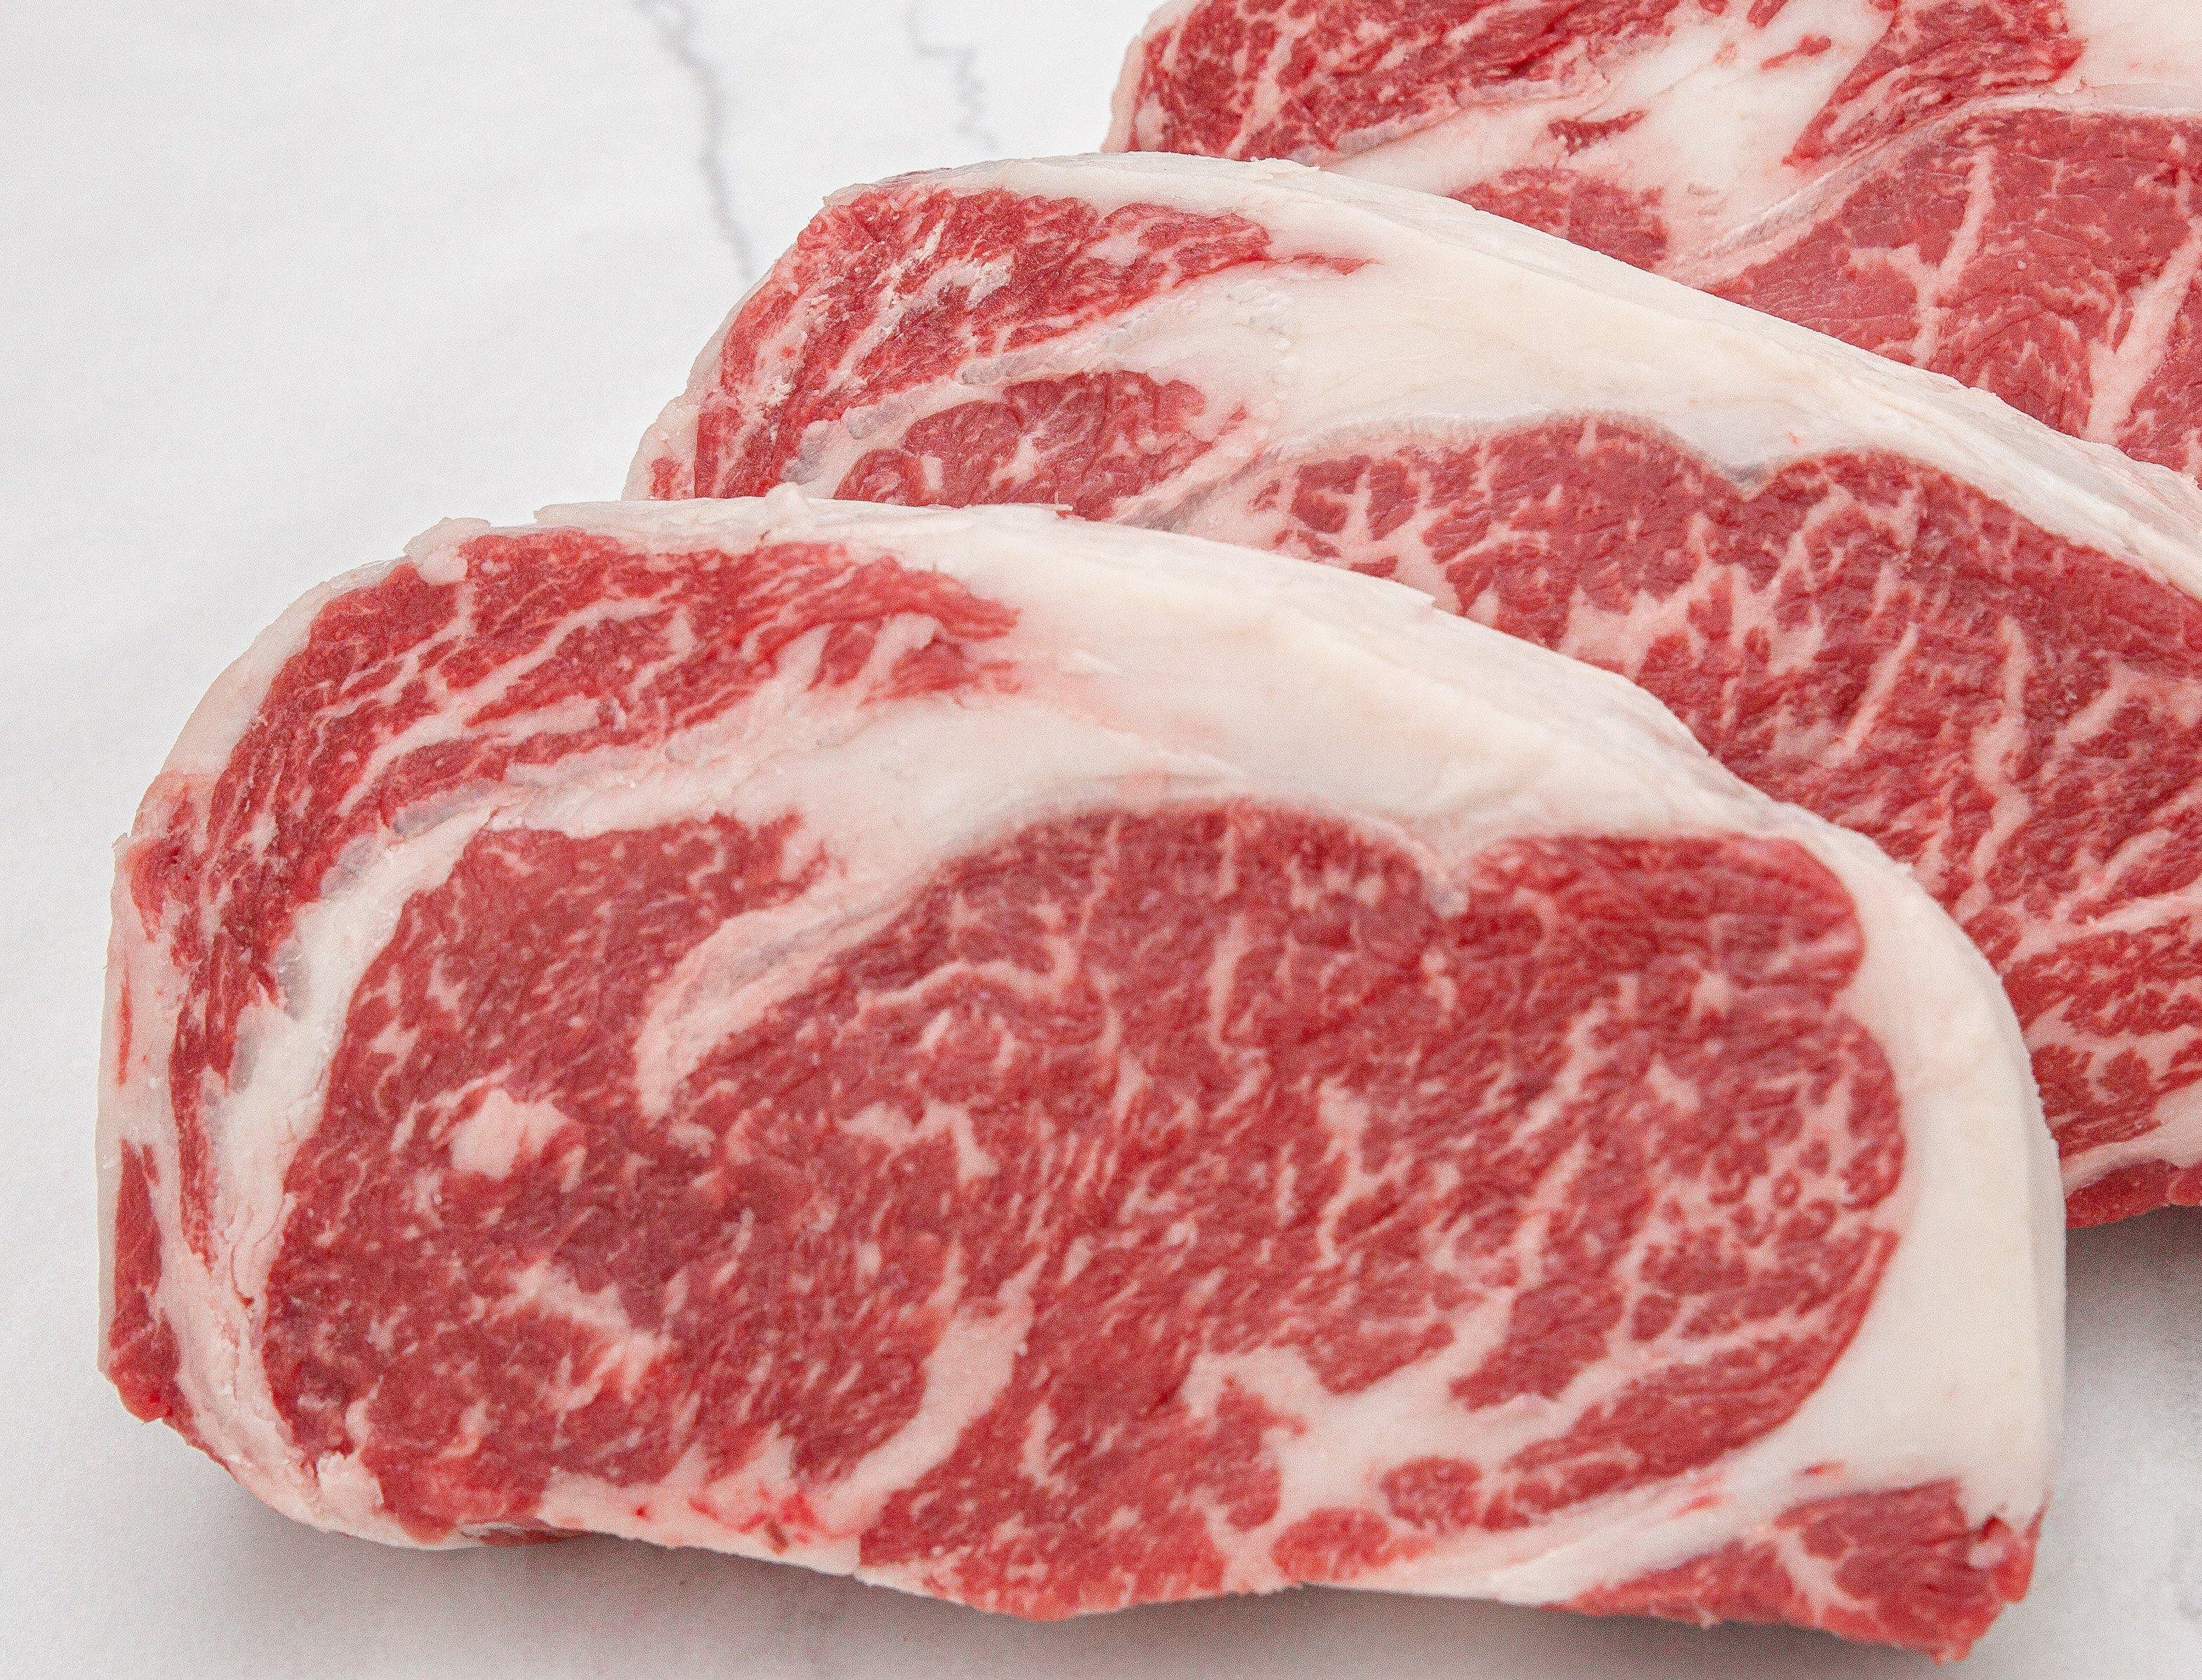 Prime Boneless Ribeye Steak – PAT LAFRIEDA HOME DELIVERY